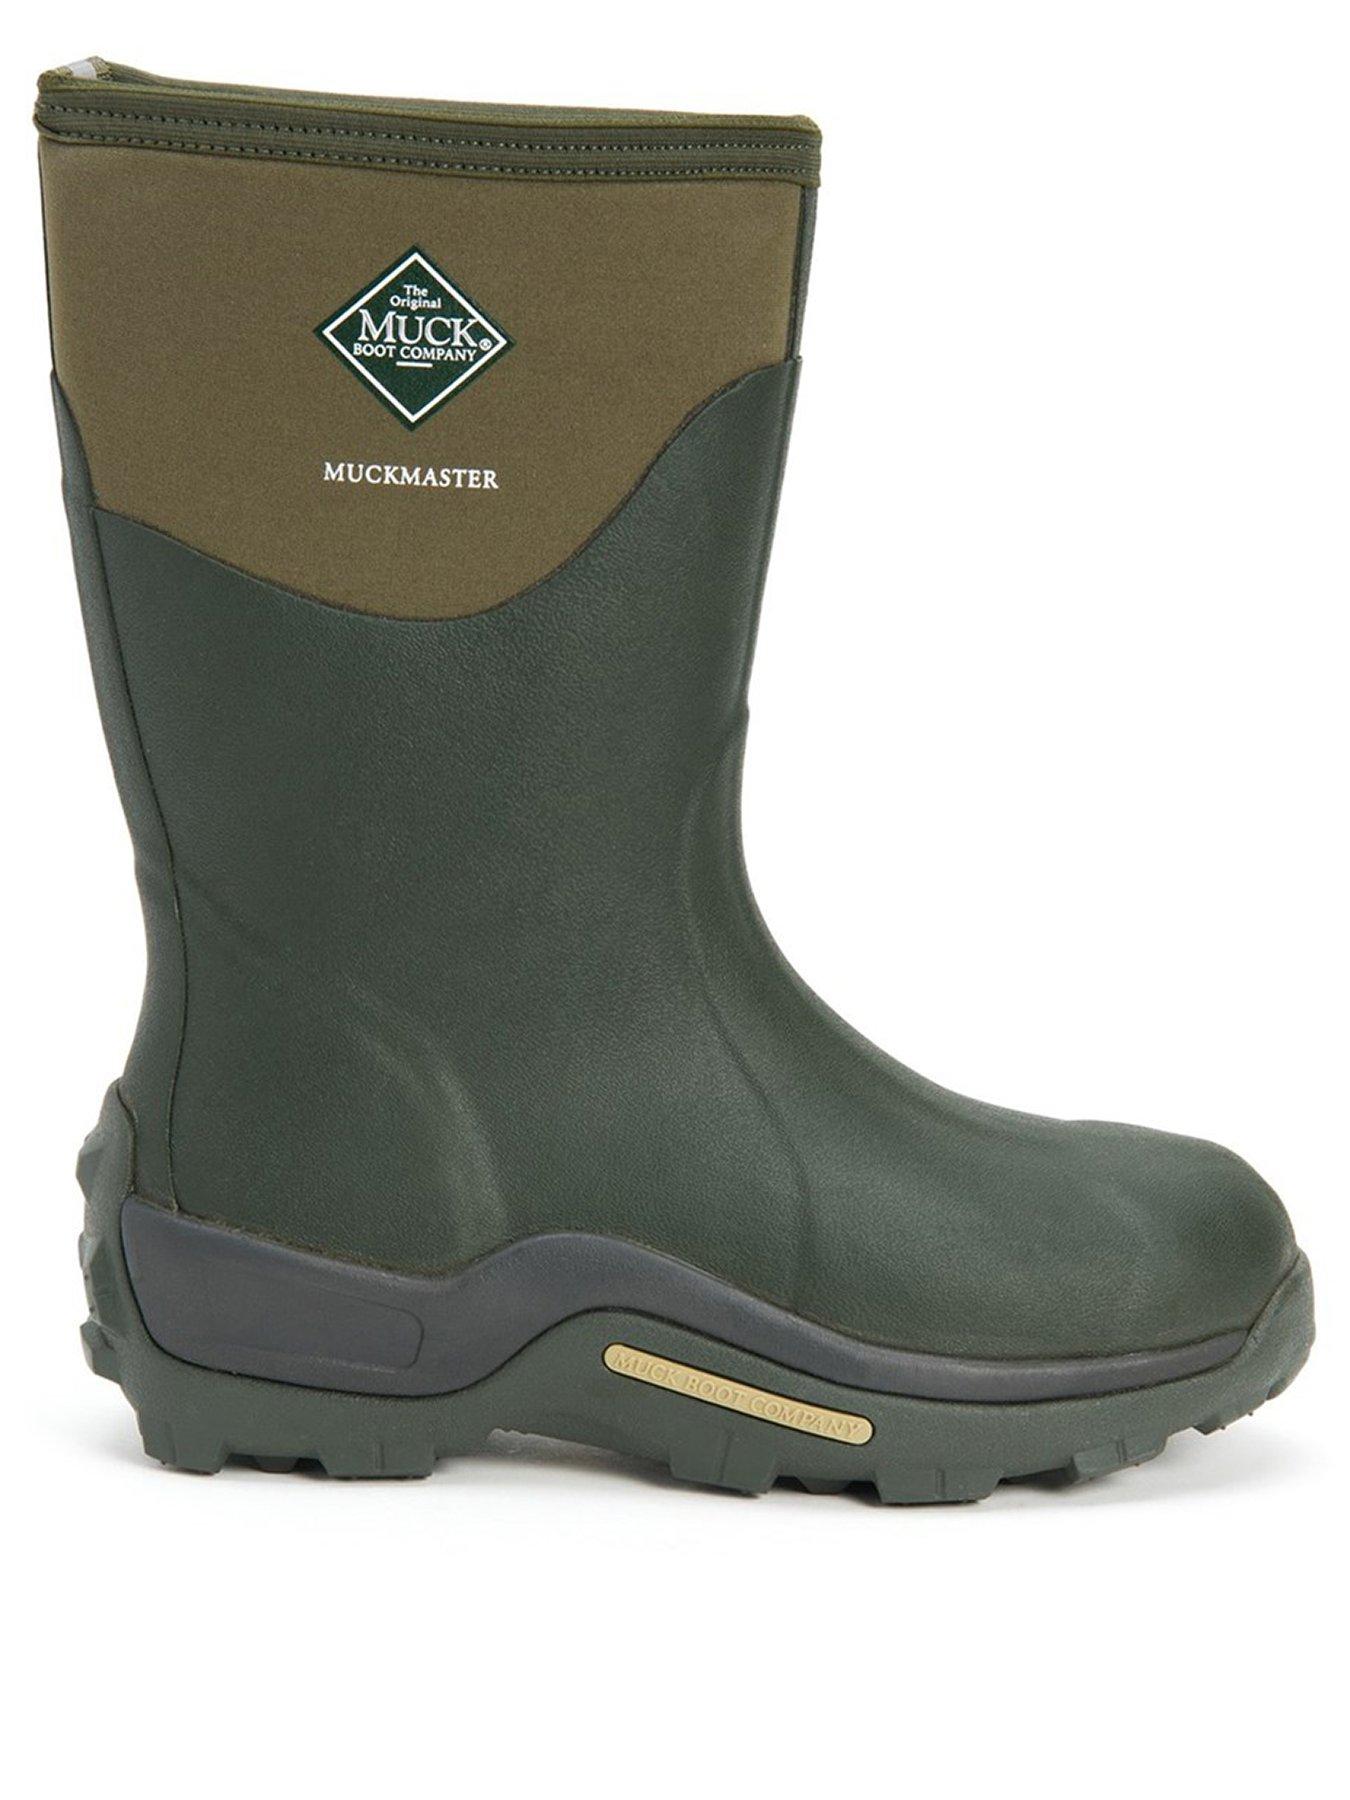 Muck Boots Mens Muckmaster Mid - Moss, Dark Green, Size 7, Men